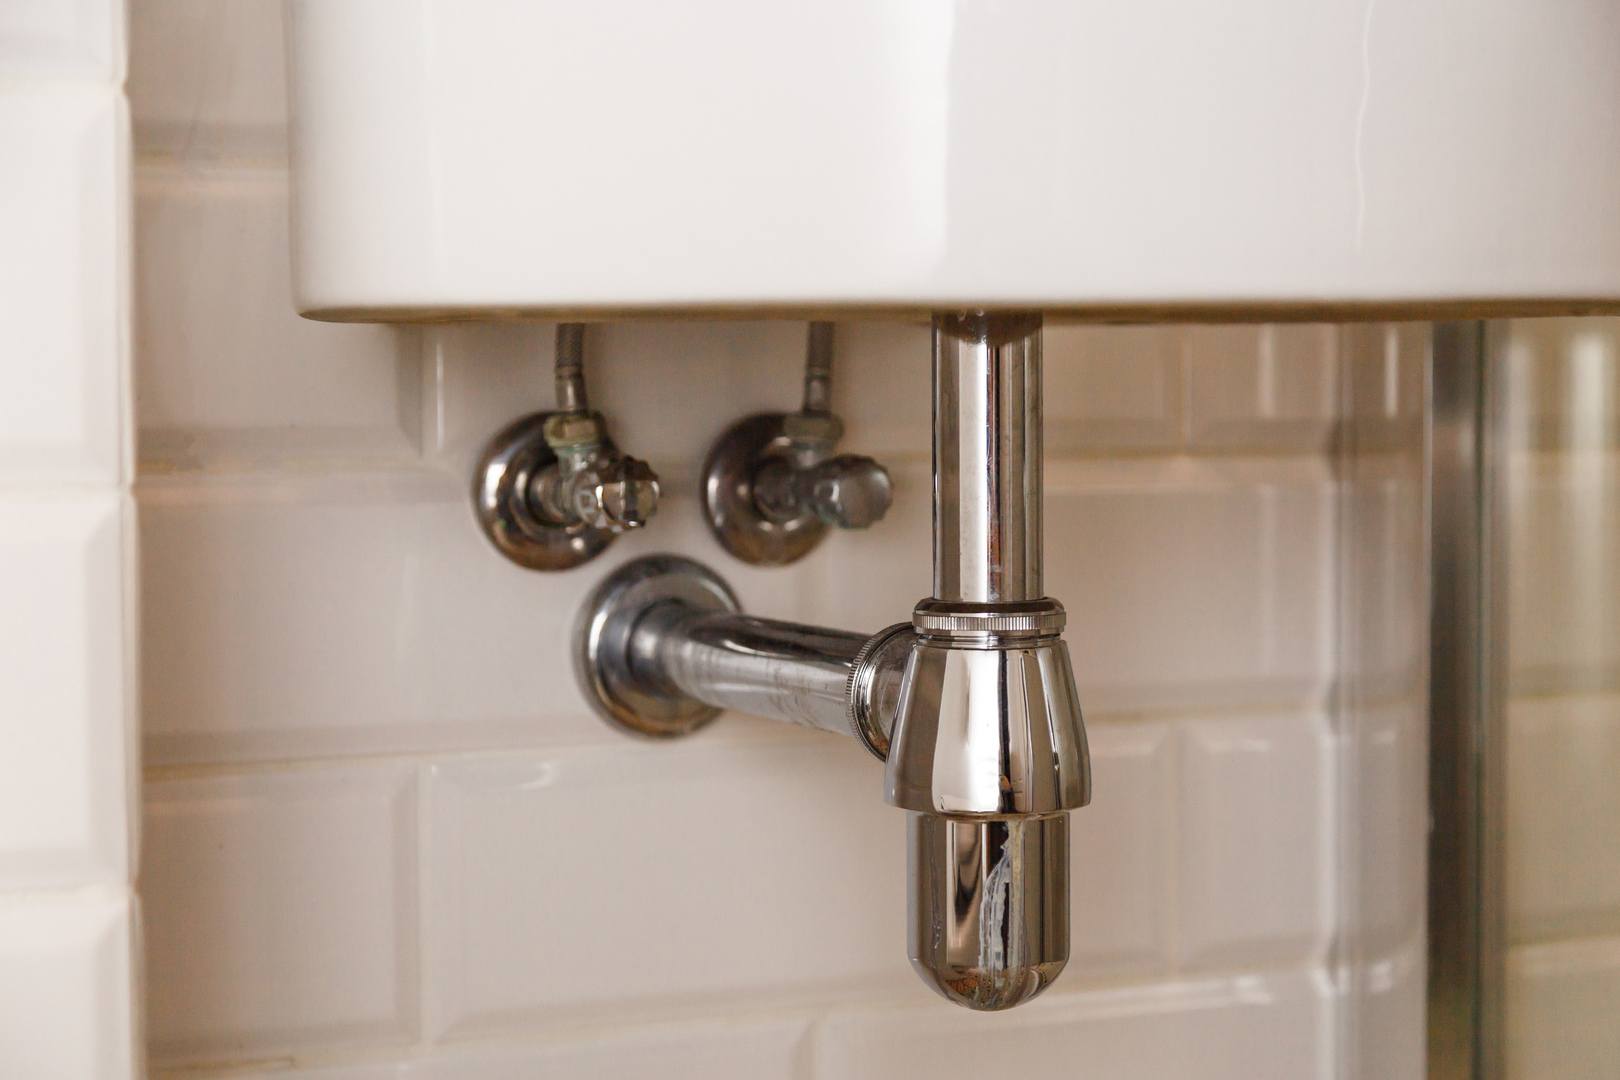 Basin siphon or sink drain in a bathroom, clean